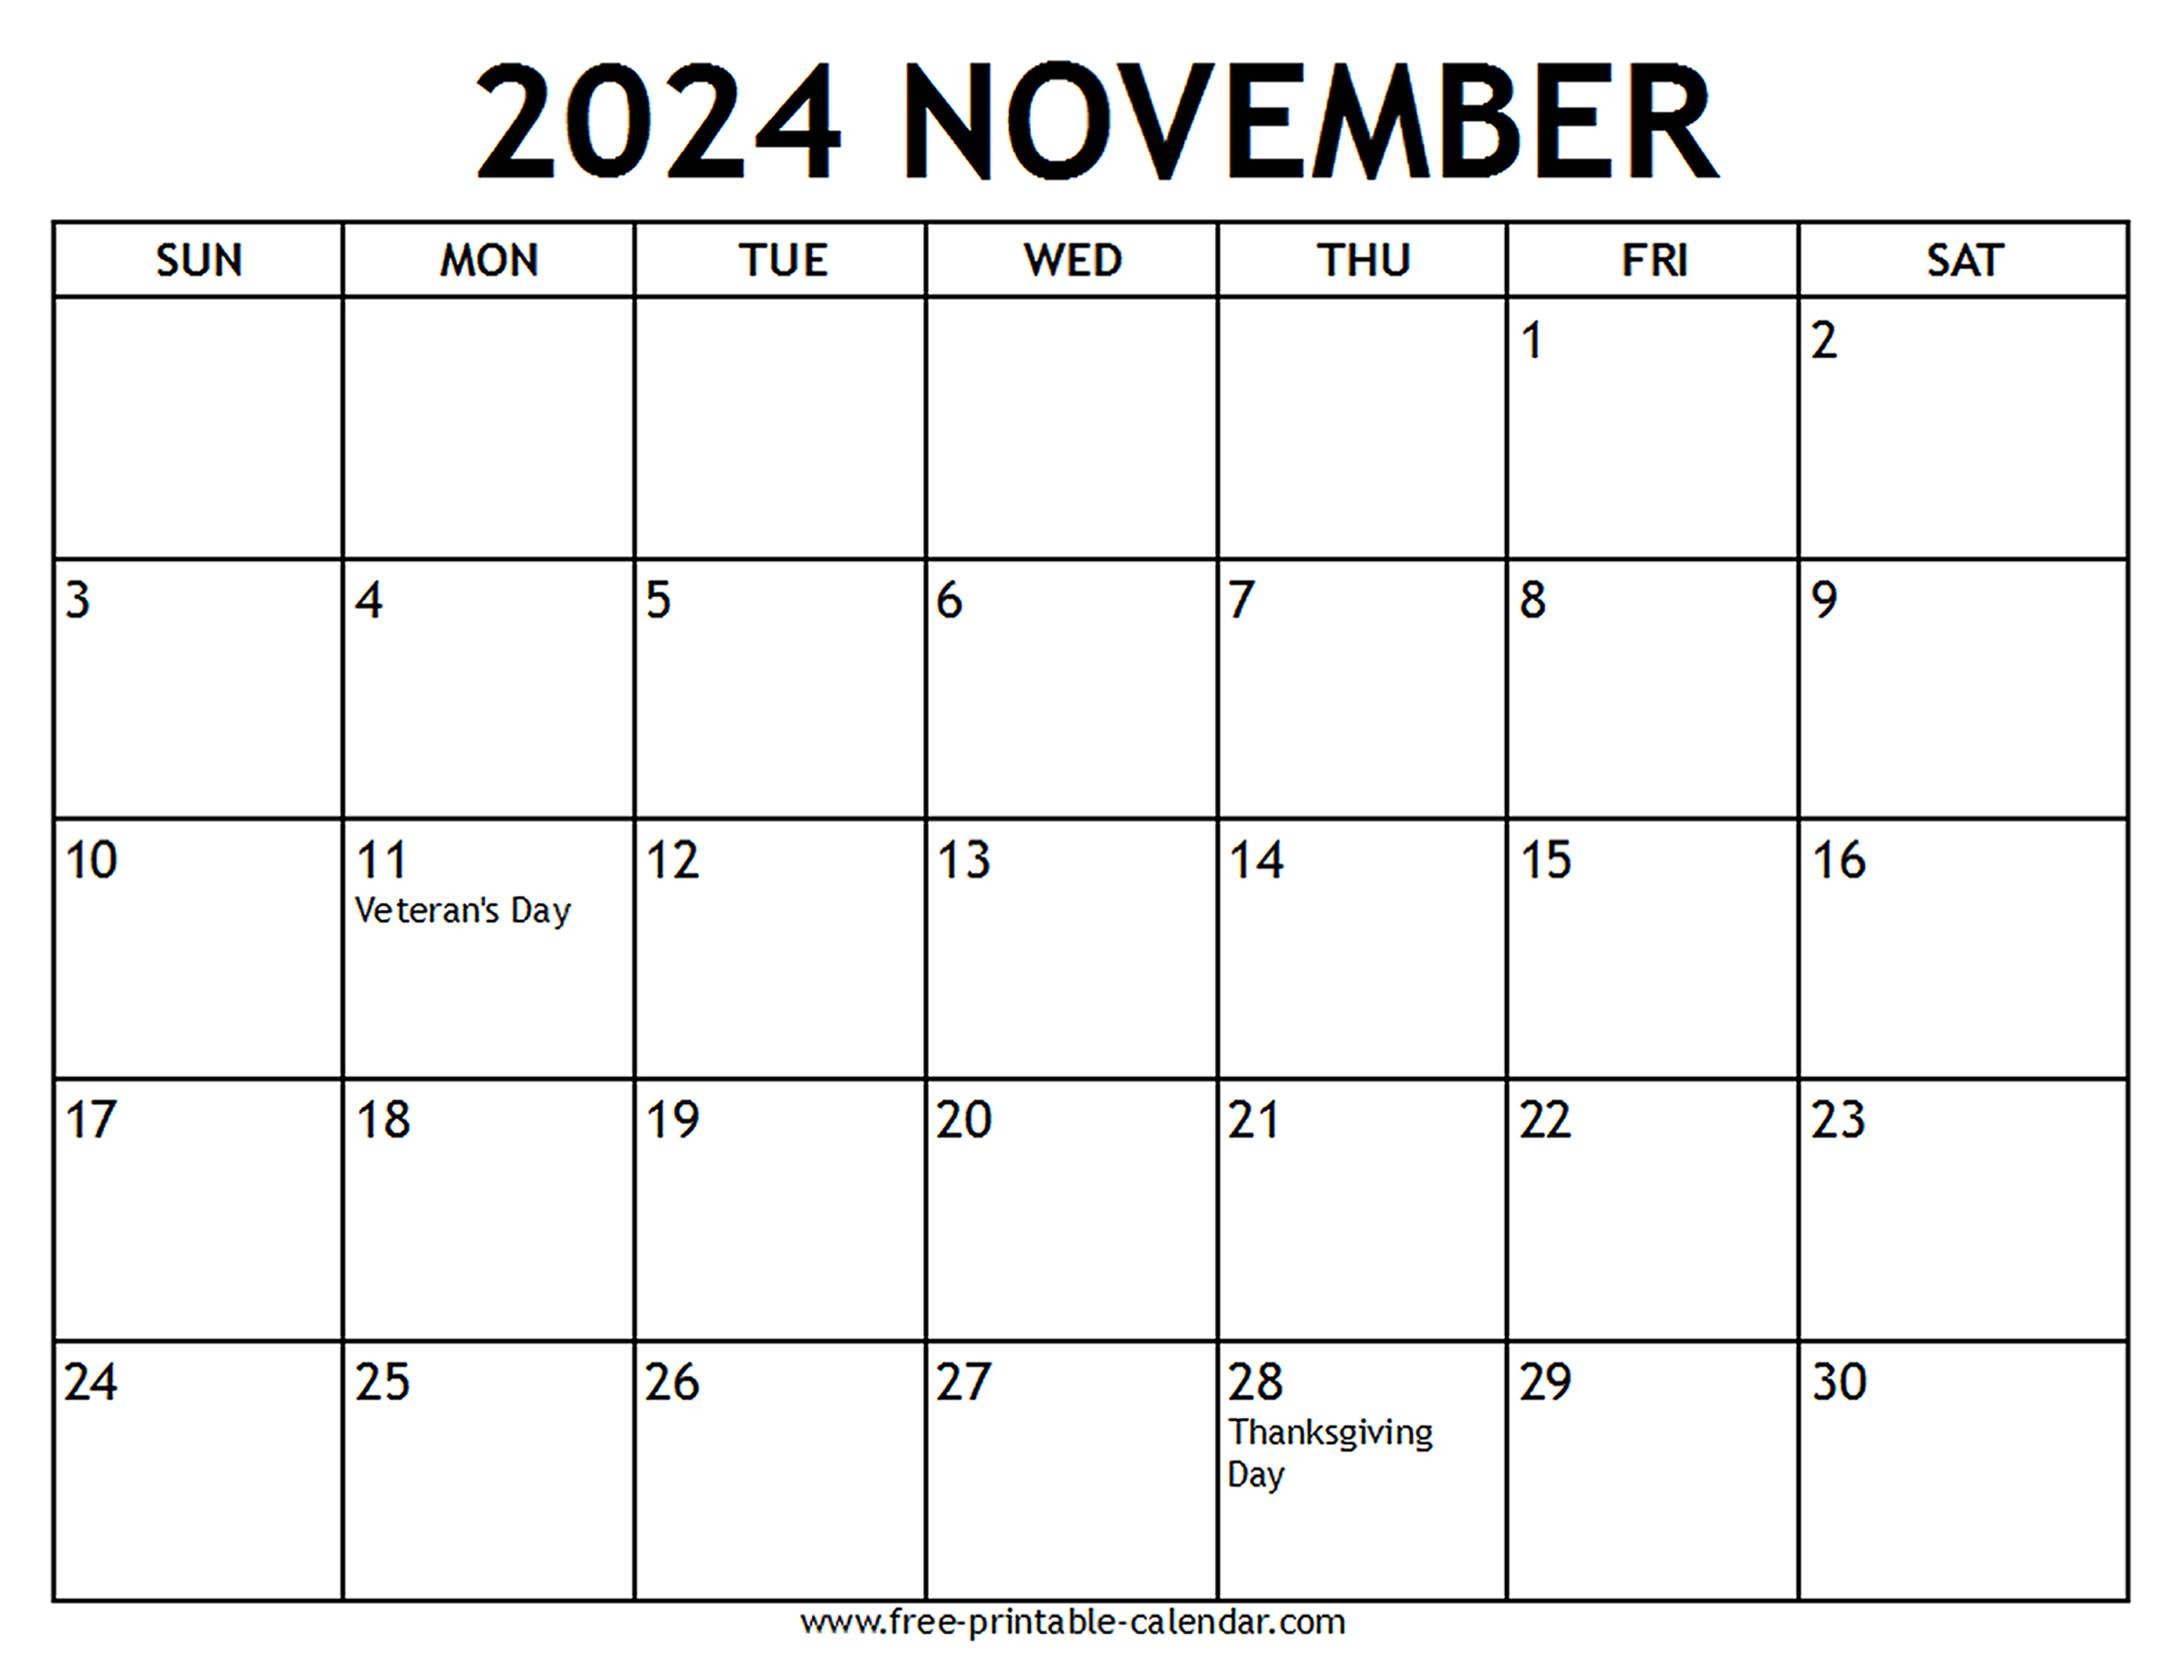 November 2024 Calendar Us Holidays - Free-Printable-Calendar intended for Free Printable Calendar 2024 November December